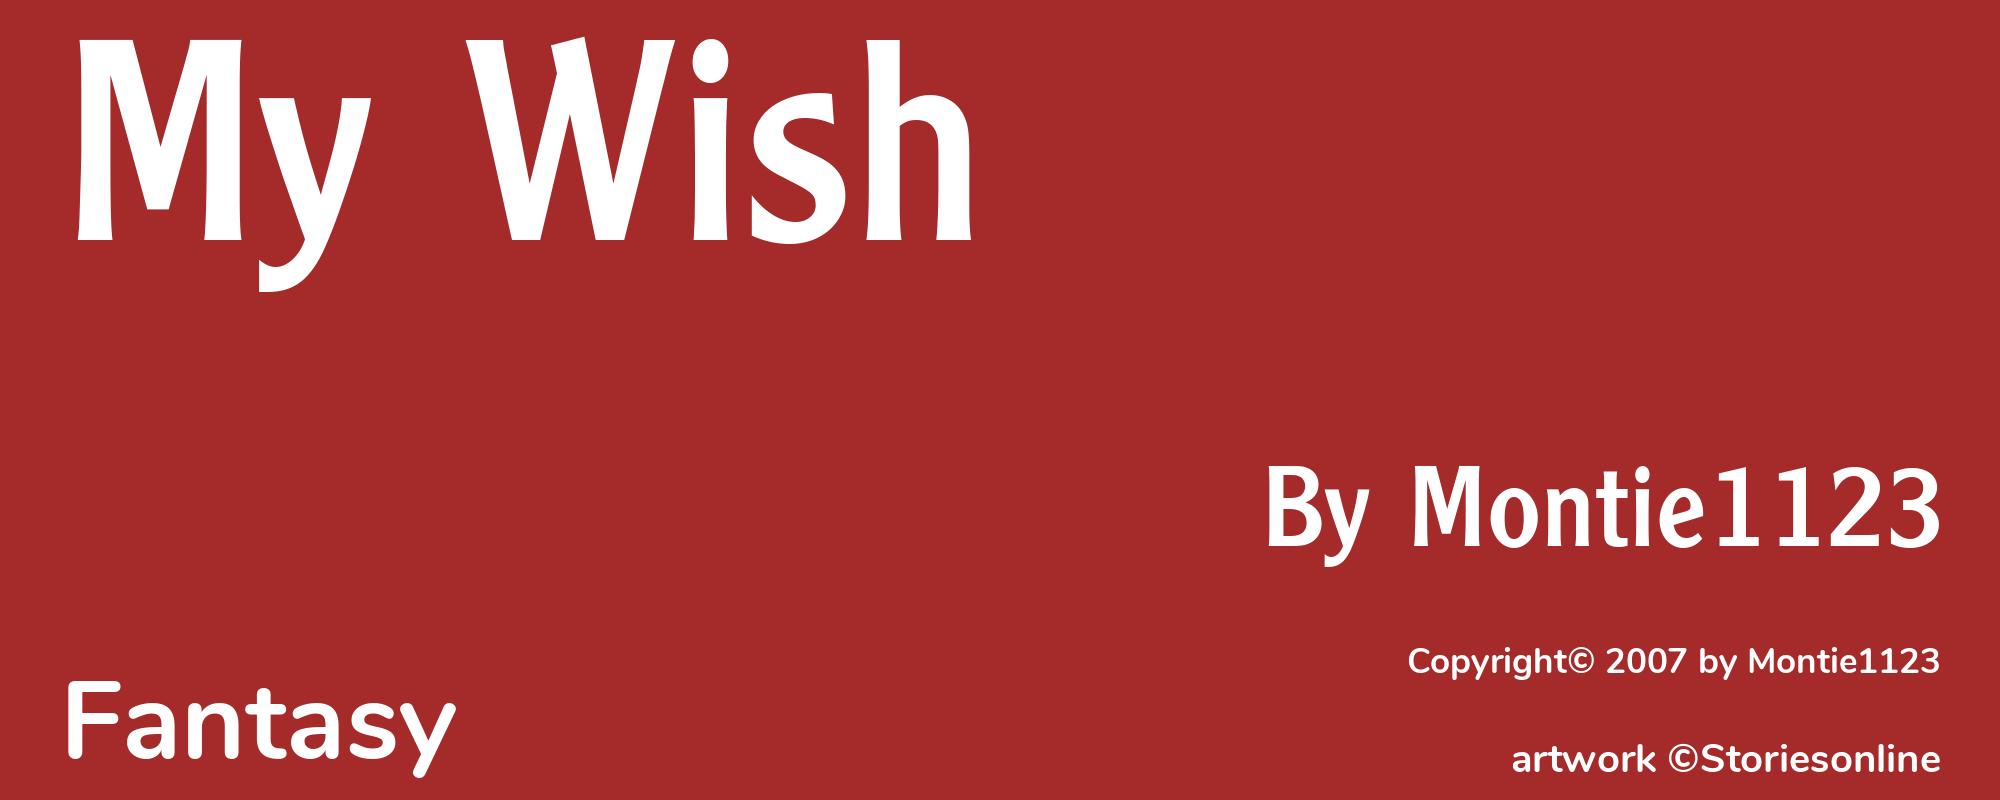 My Wish - Cover